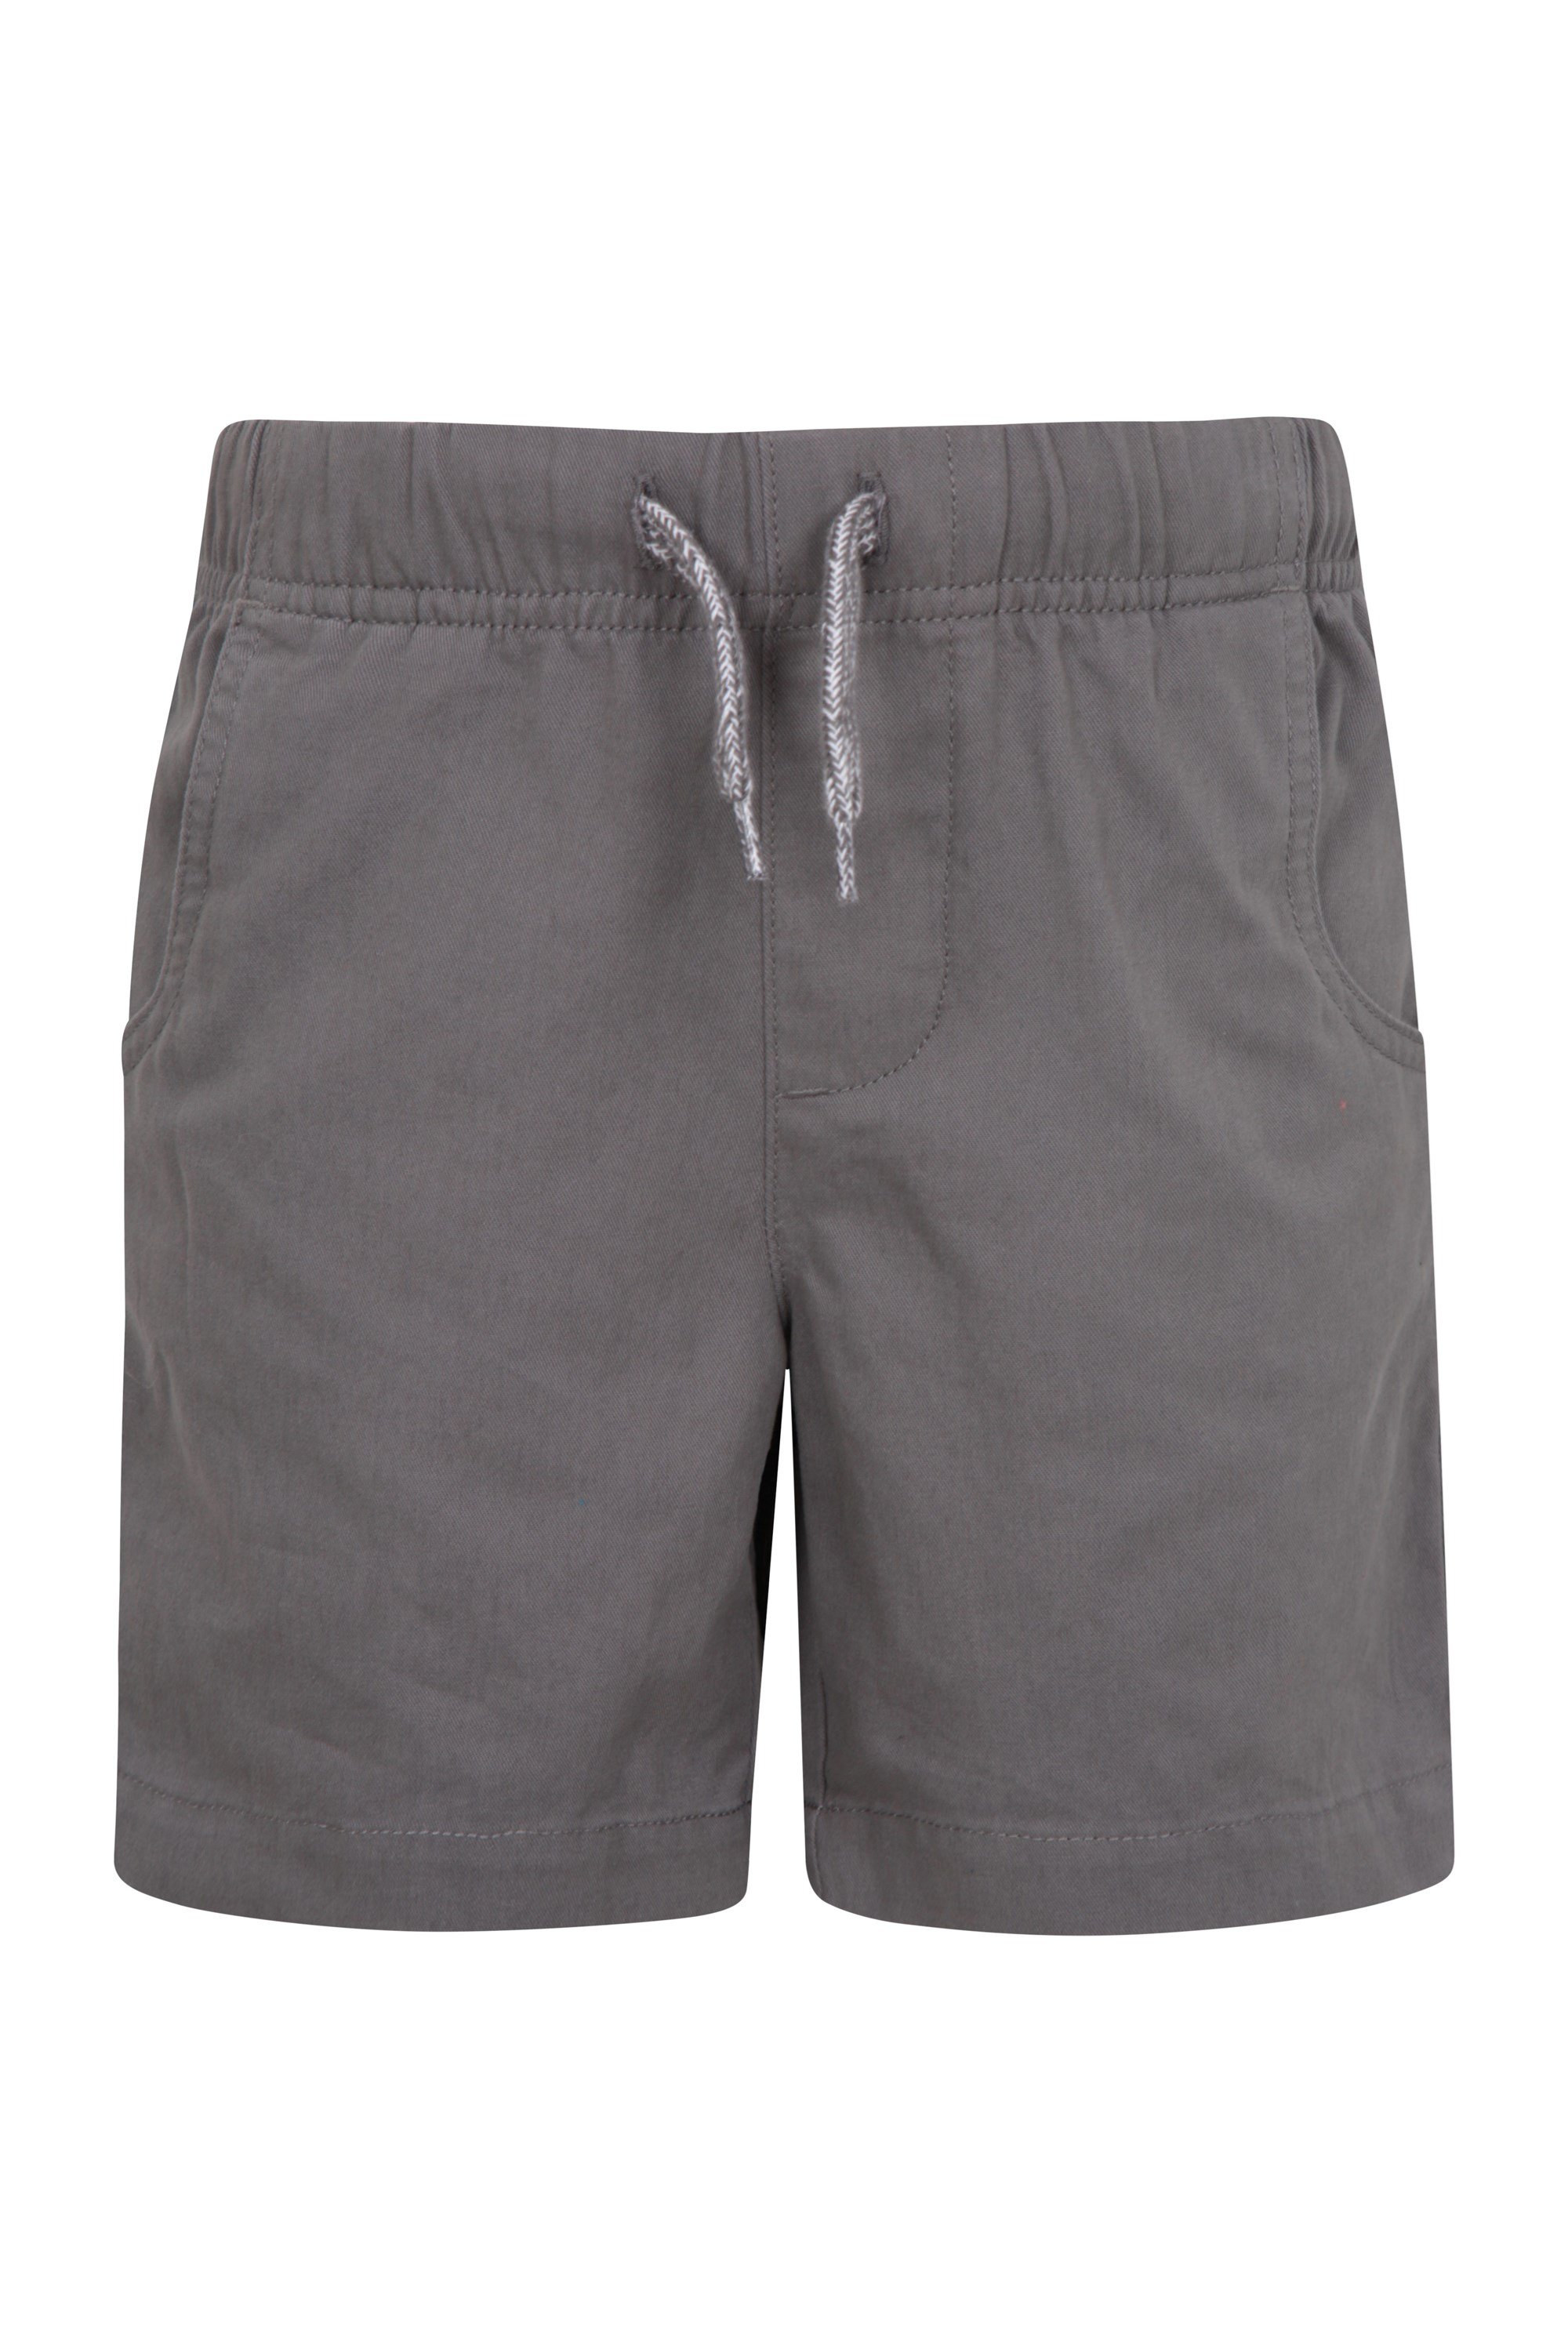 Mountain Warehouse Waterfall Kids Shorts 100/% Cotton Summer Pants